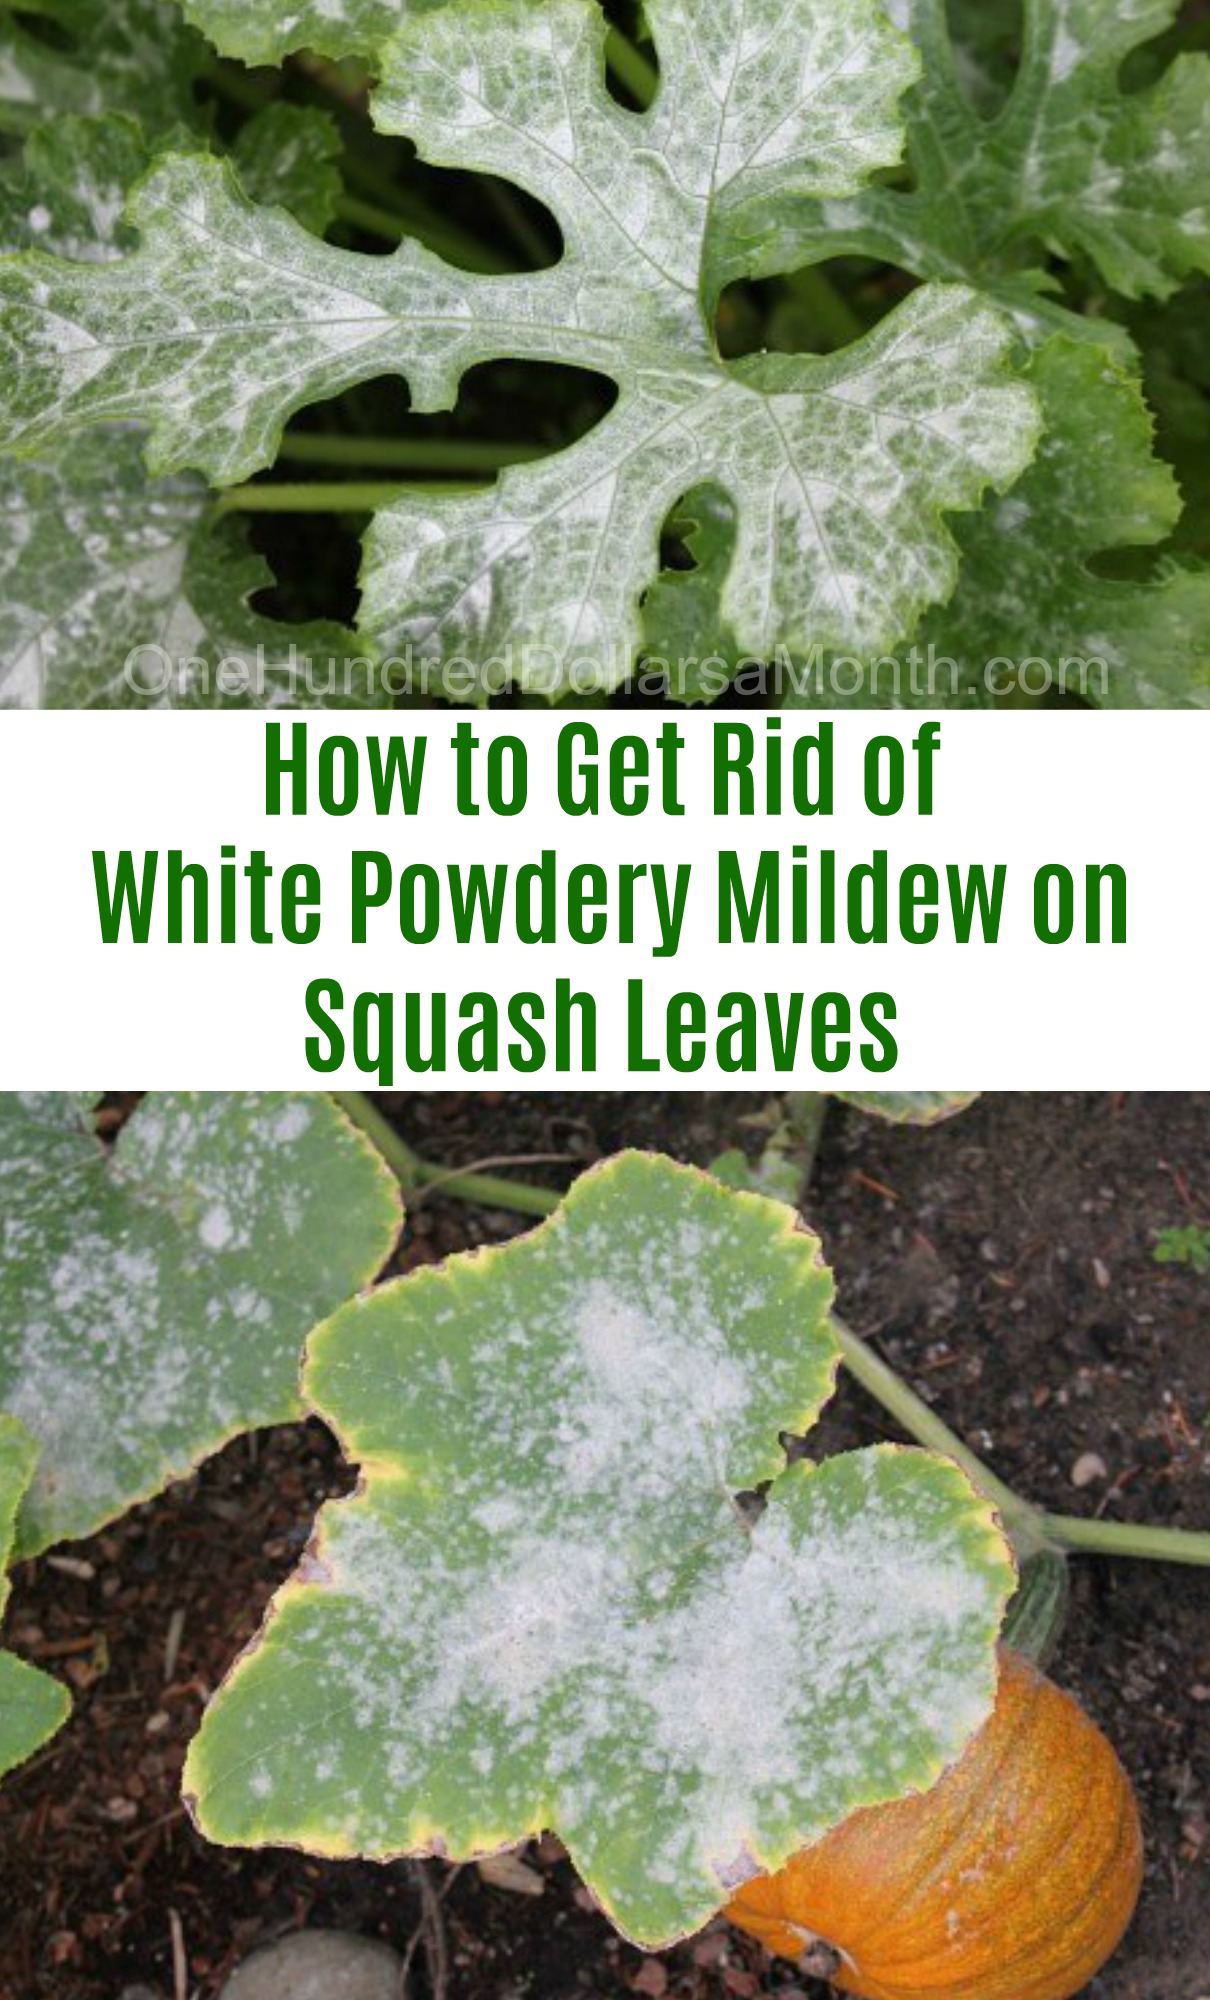 White Powdery Mildew on Squash Leaves